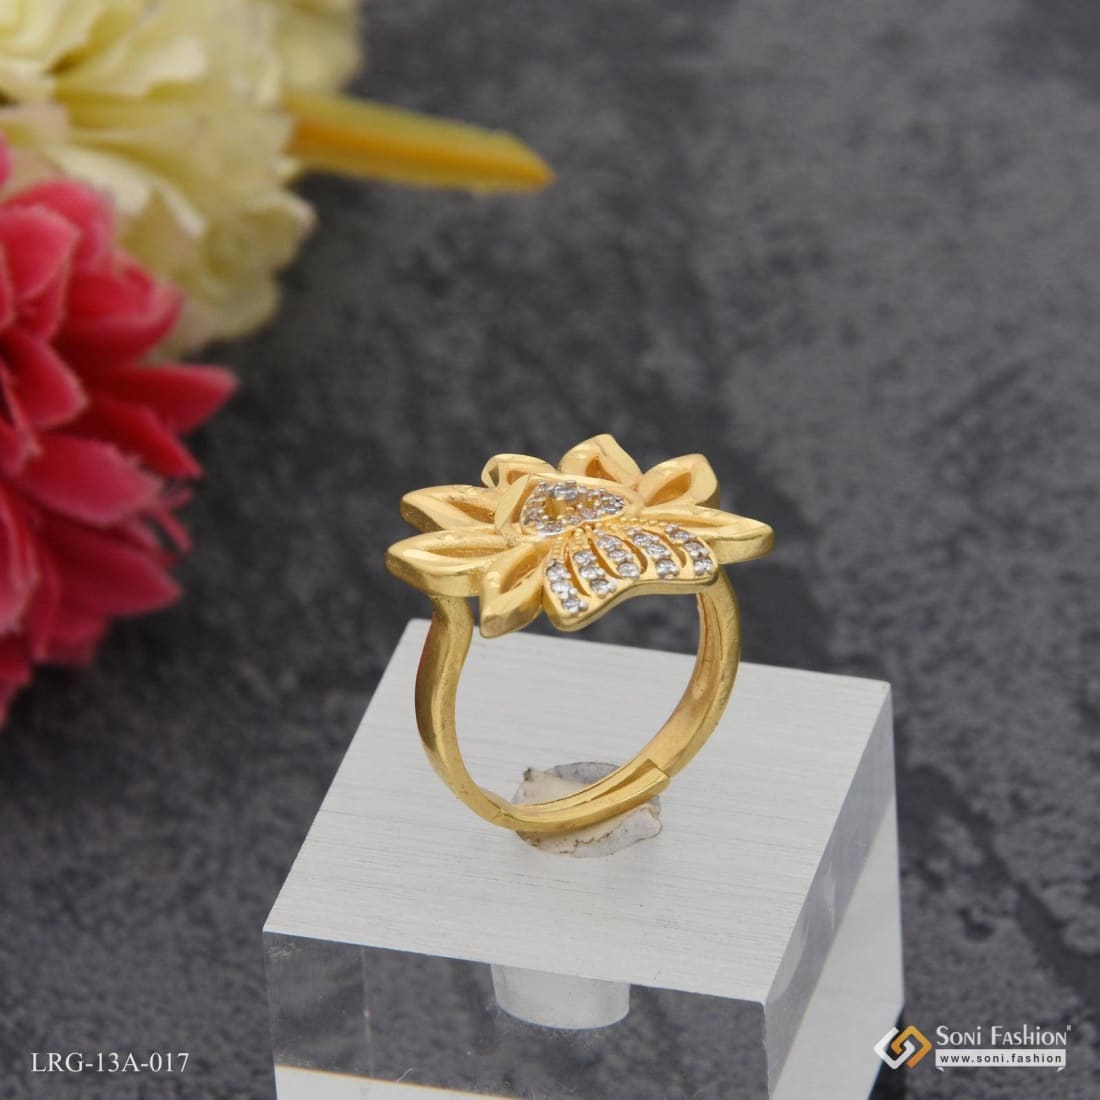 Vintage Diamond Ring - 1950's Floral Designed Diamond Ring